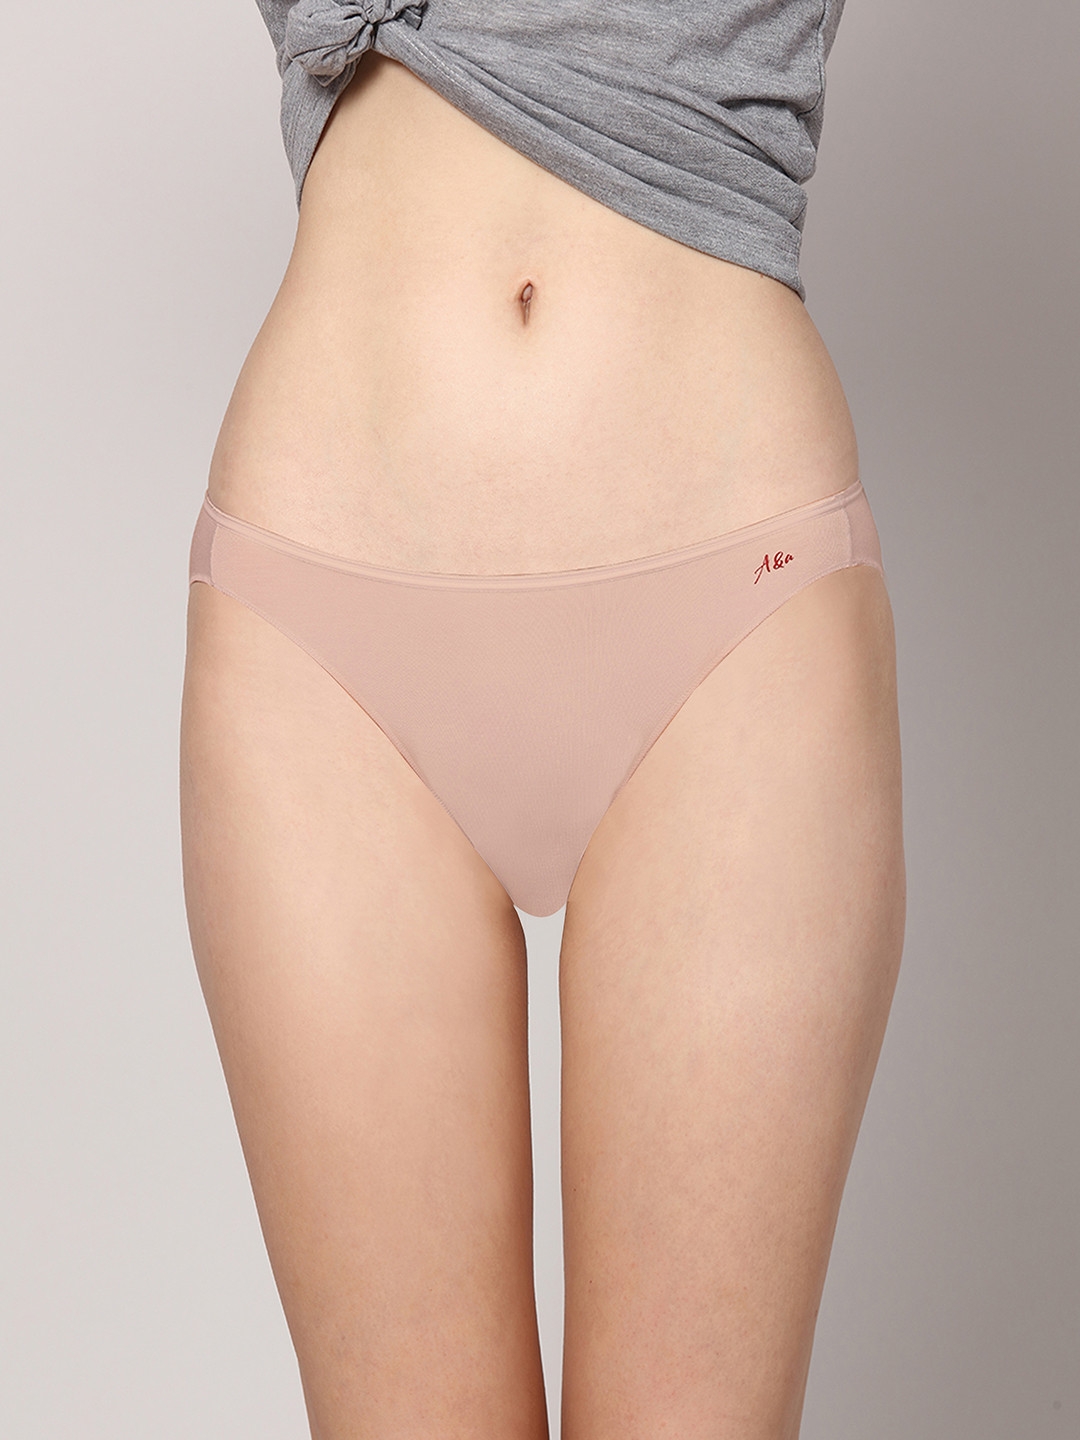 AshleyandAlvis | AshleyandAlvis Women's Panties Micro Modal, Anti Bacterial, Skinny Soft, Premium Bikini-No Itching, Sweat Proof, Double In-seam Gusset 1